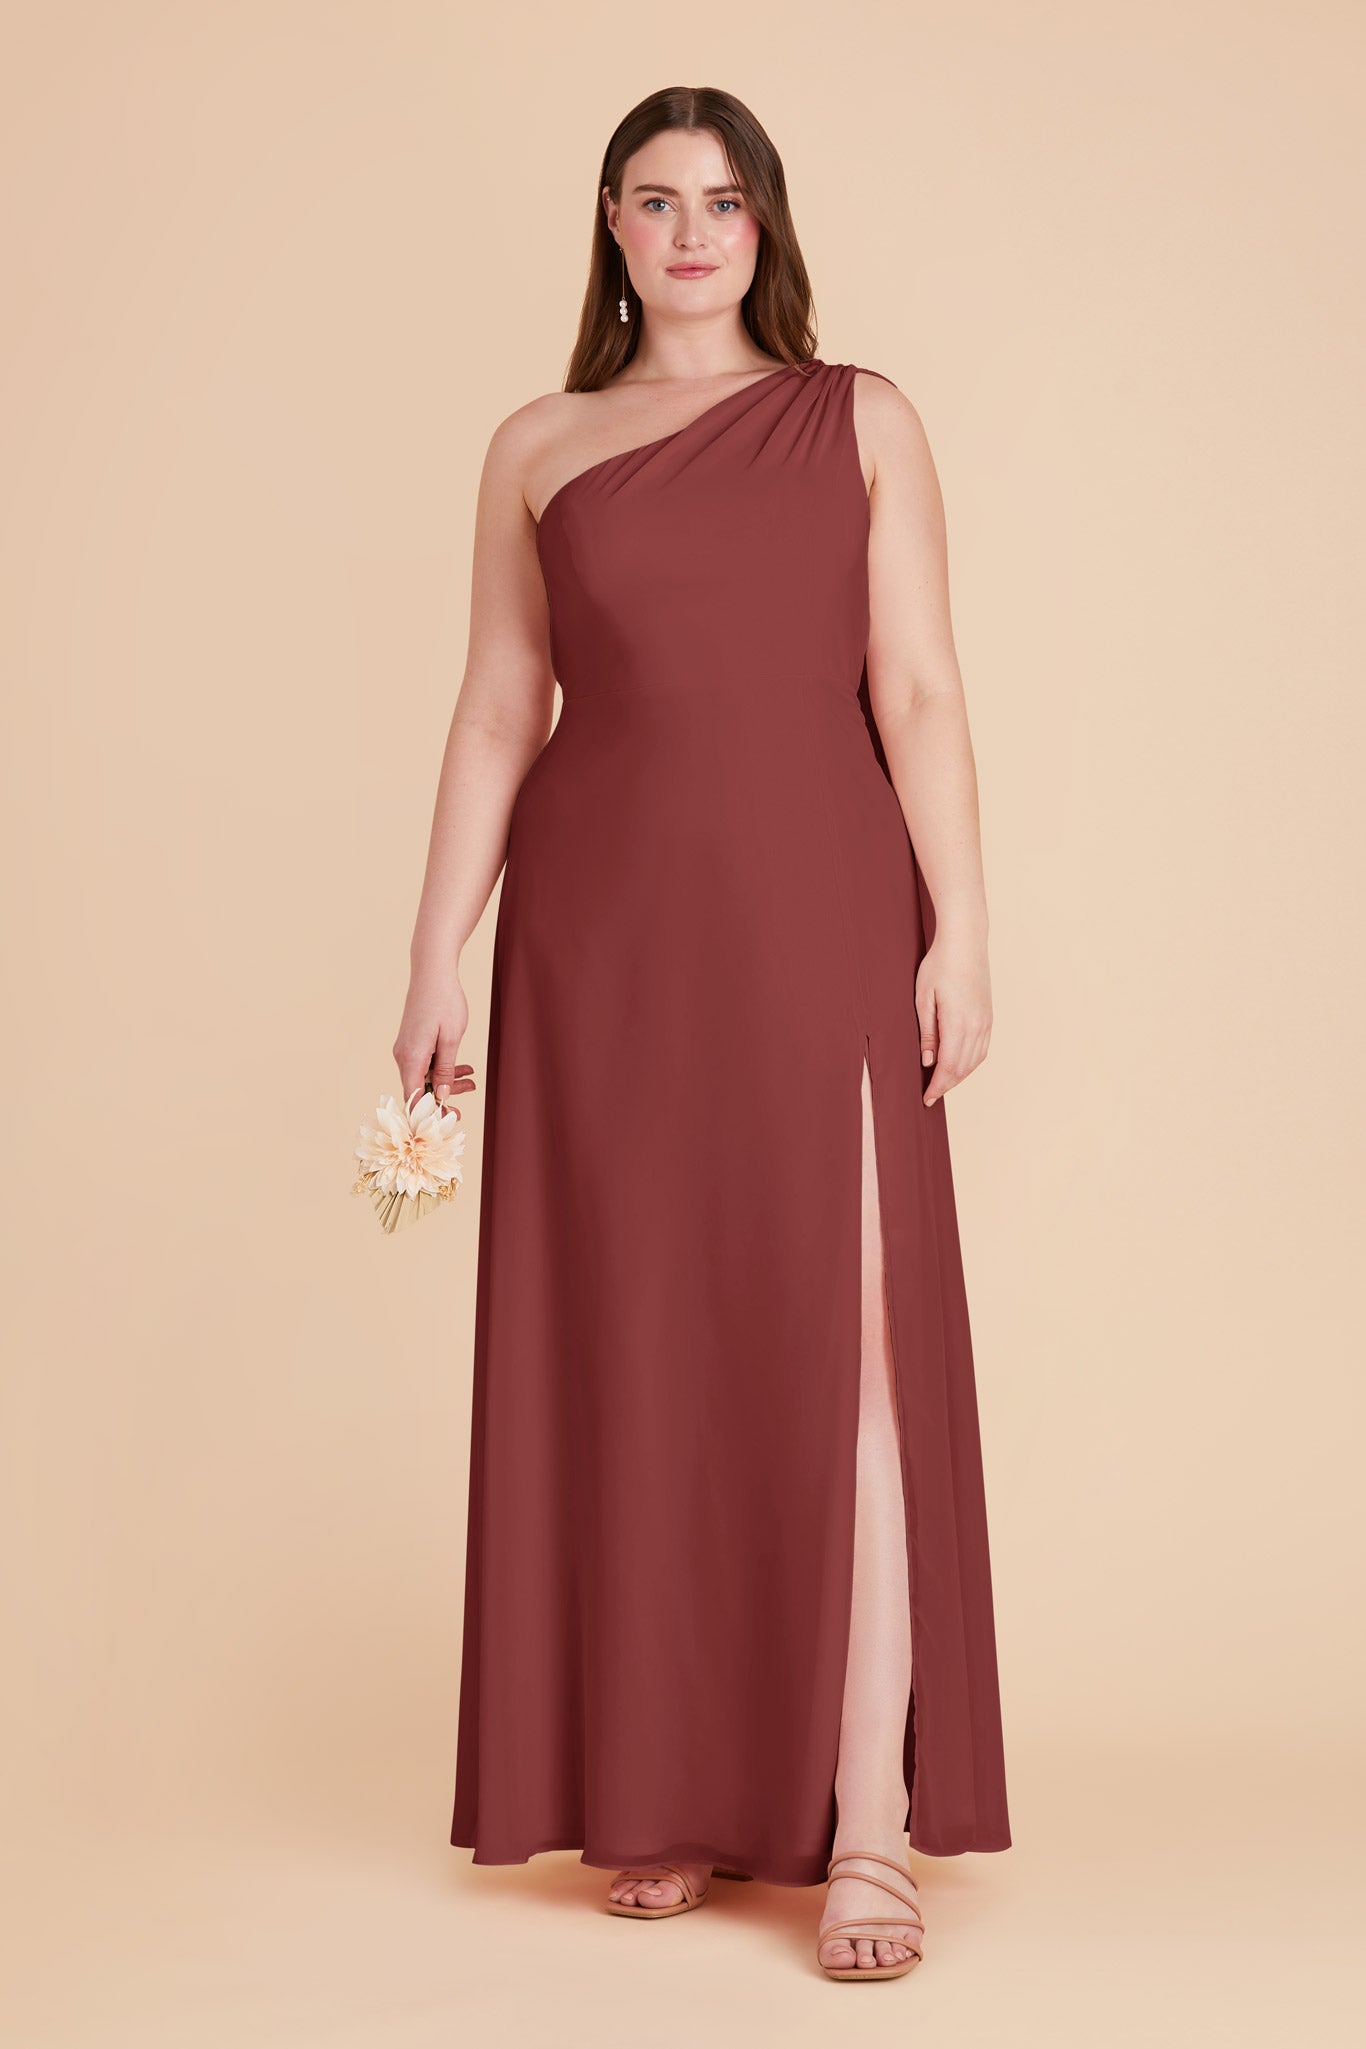 Rosewood Melissa Chiffon Dress by Birdy Grey